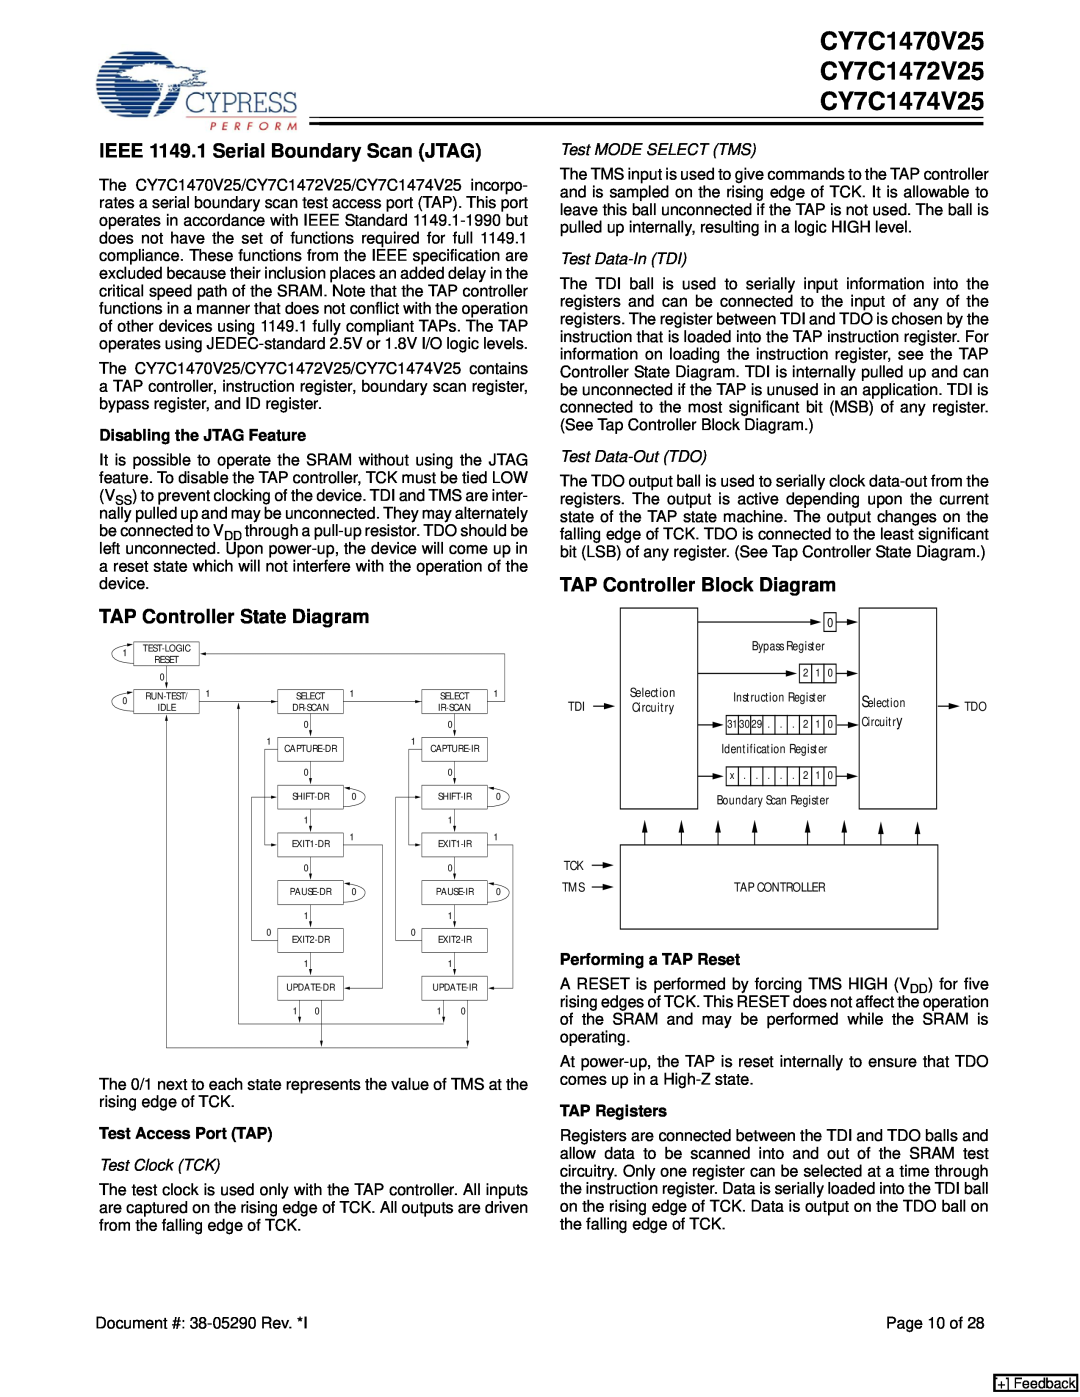 Cypress CY7C1474V25 IEEE 1149.1 Serial Boundary Scan JTAG, TAP Controller Block Diagram, TAP Controller State Diagram 